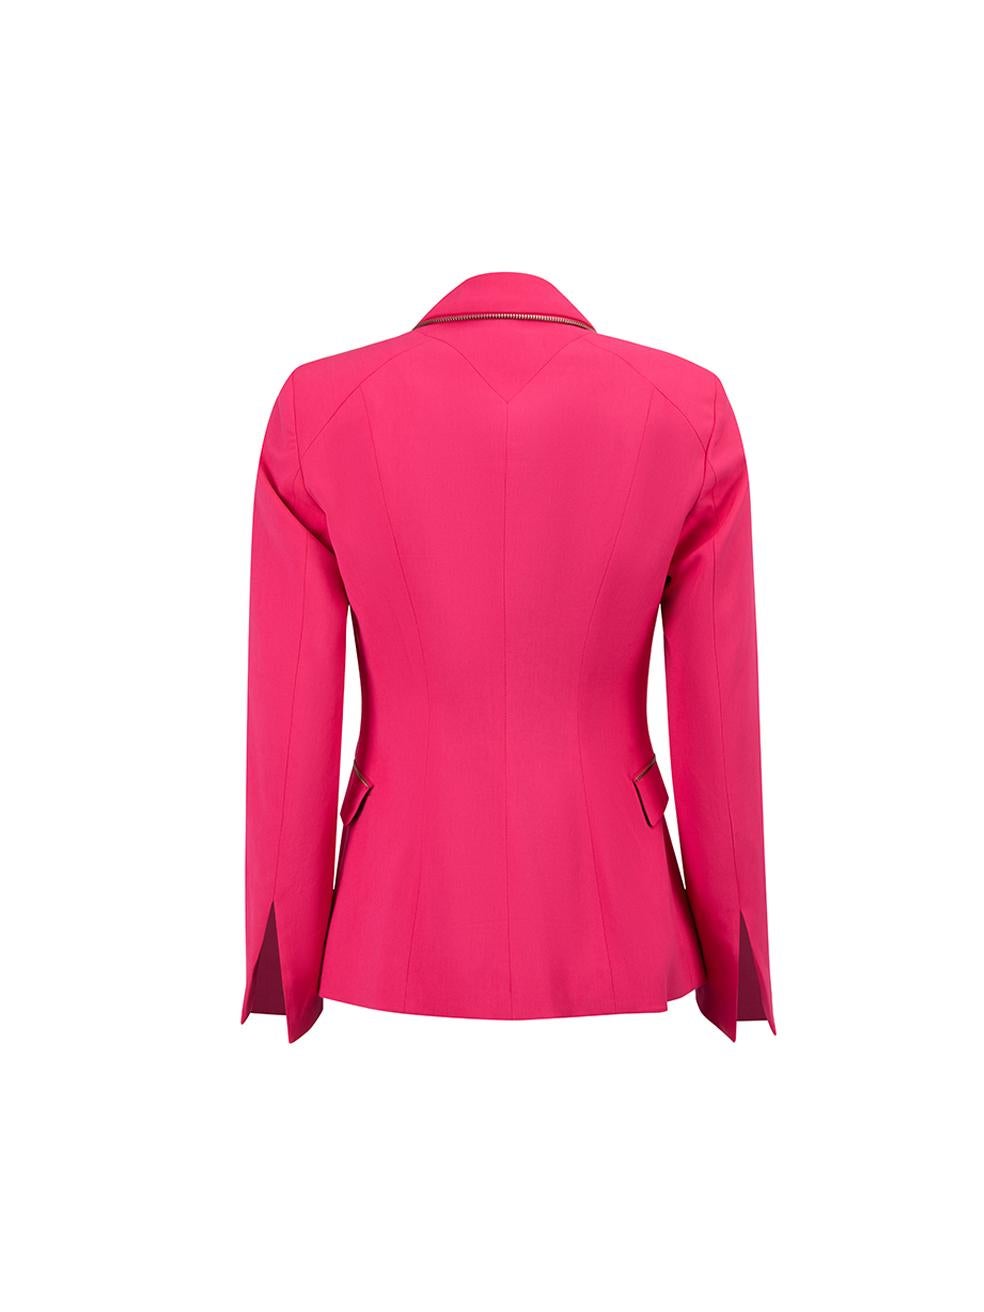 Karl Lagerfeld Women's Pink Zipper Detail Blazer In Good Condition In London, GB